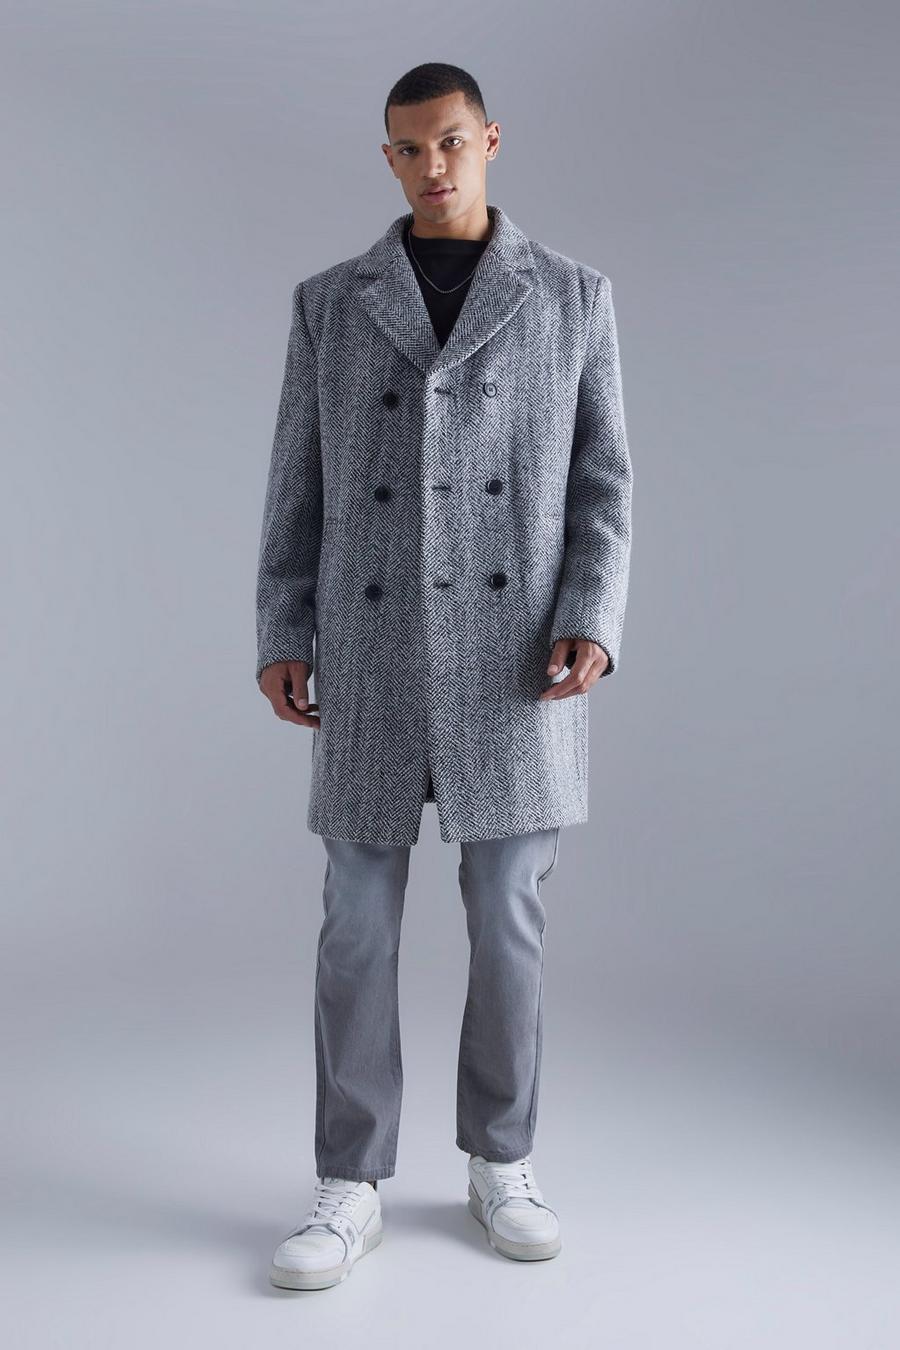 Black Tall Wool Look Herringbone Overcoat